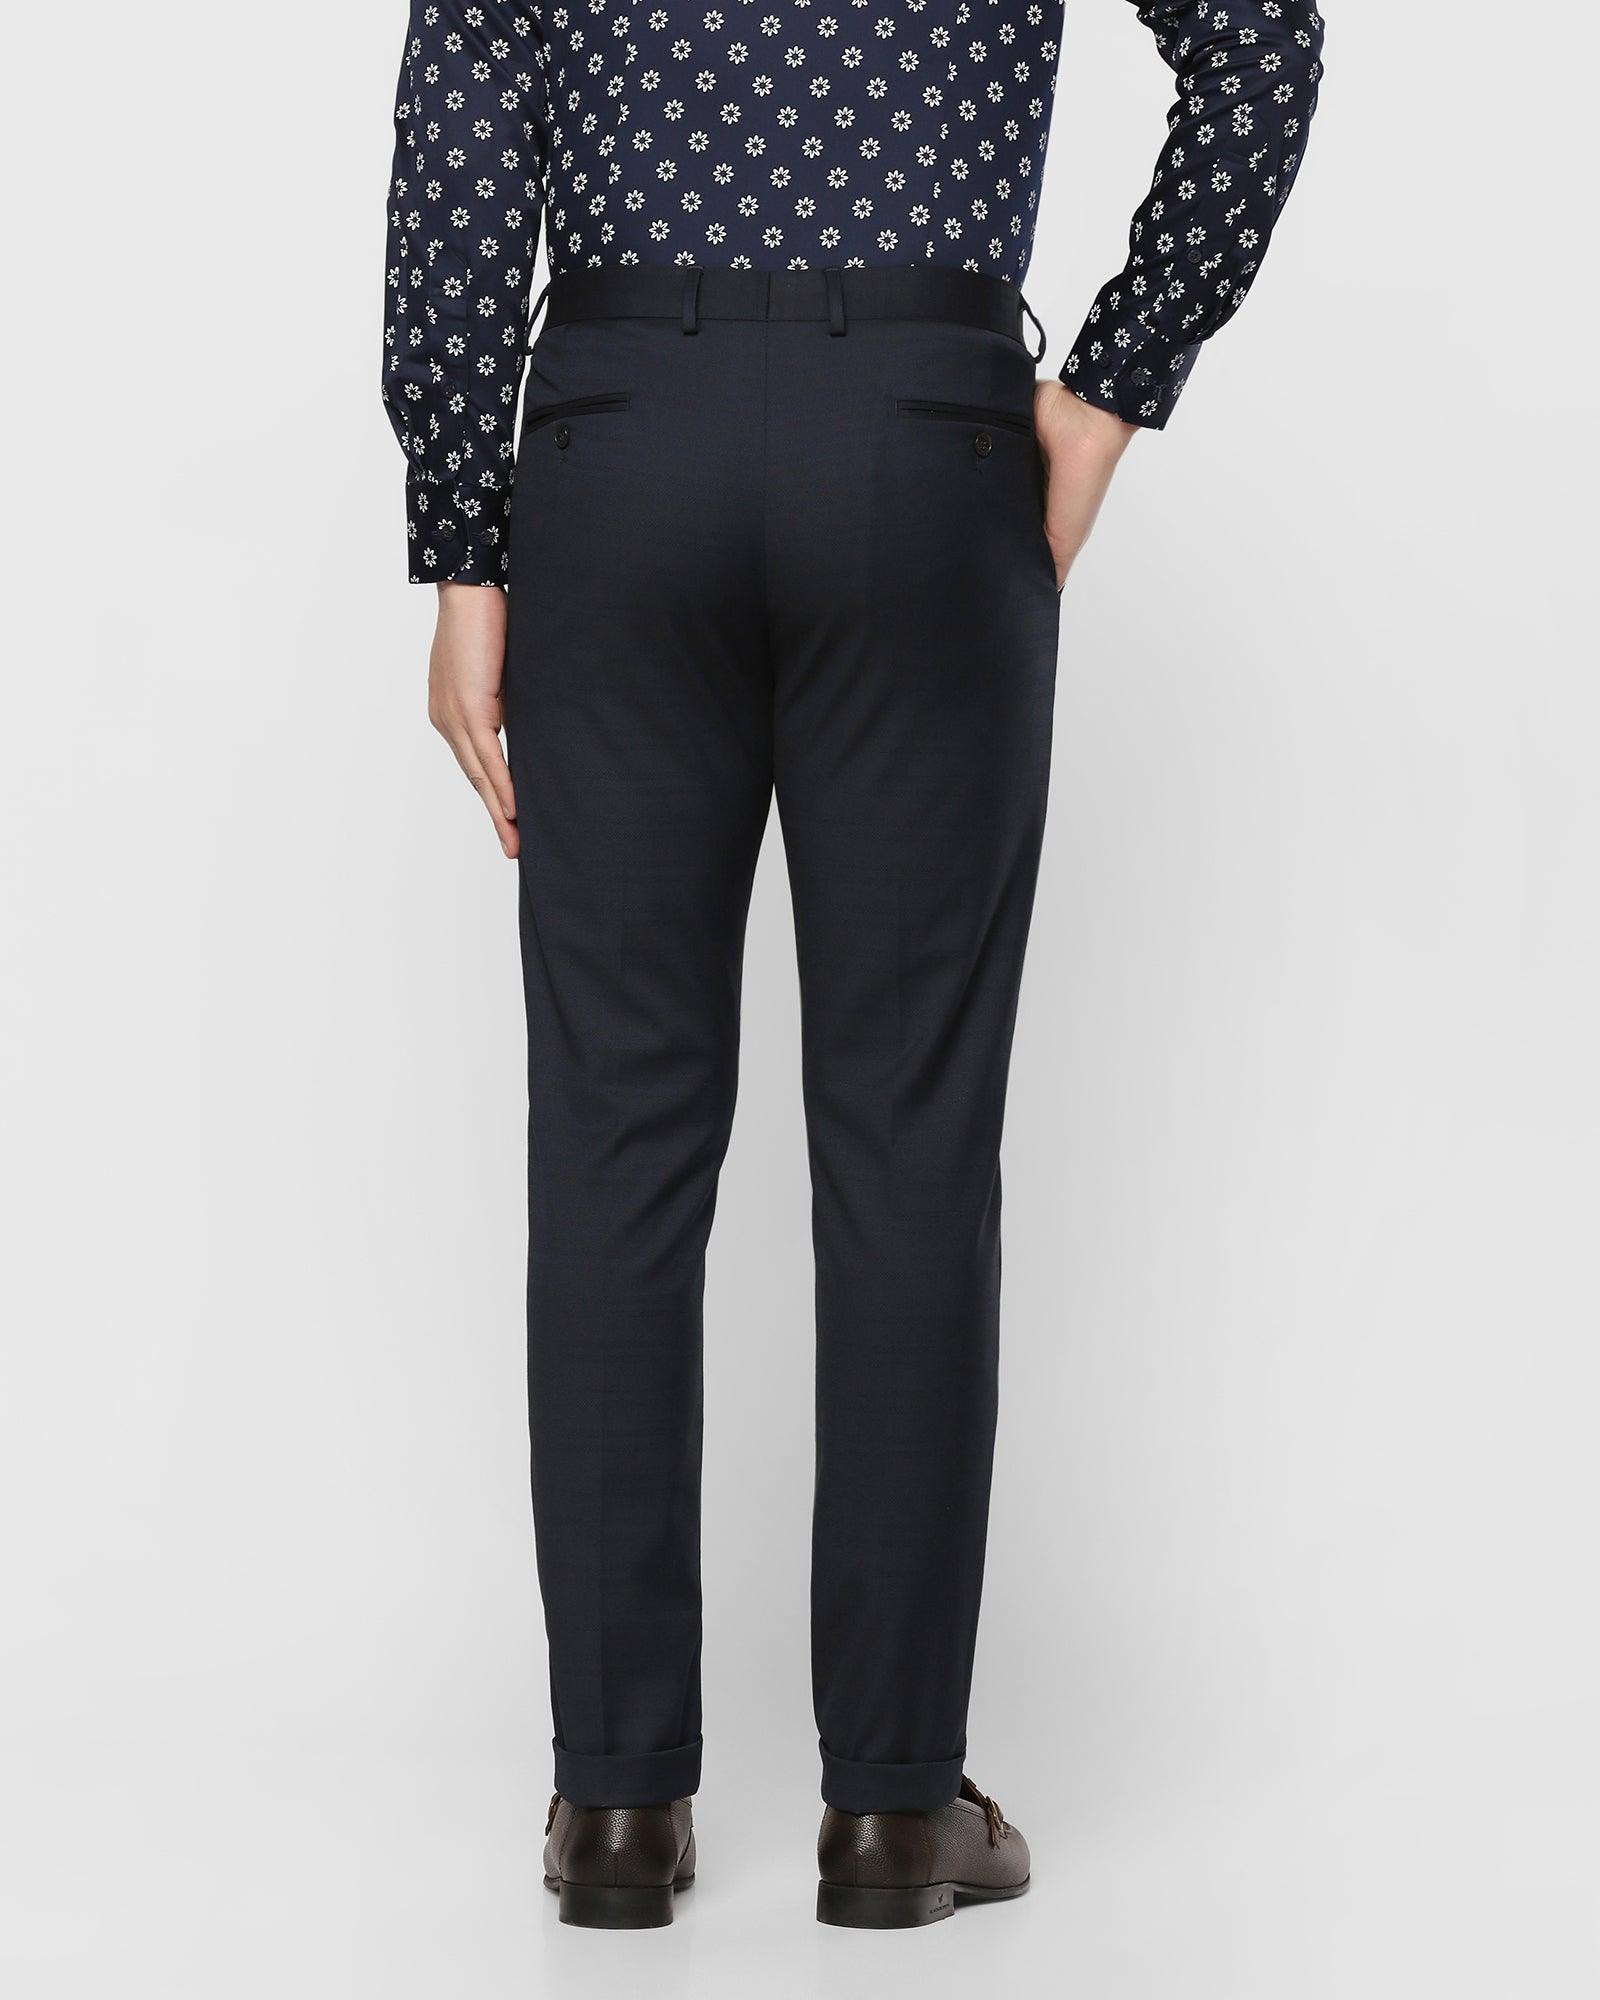 Buy DENU'S ENTERPRICE Men's Lycra Slim Fit Formal Trouser Pant | Lycra  Trouser | Formal Pant | Regular Lycra Pant Black at Amazon.in